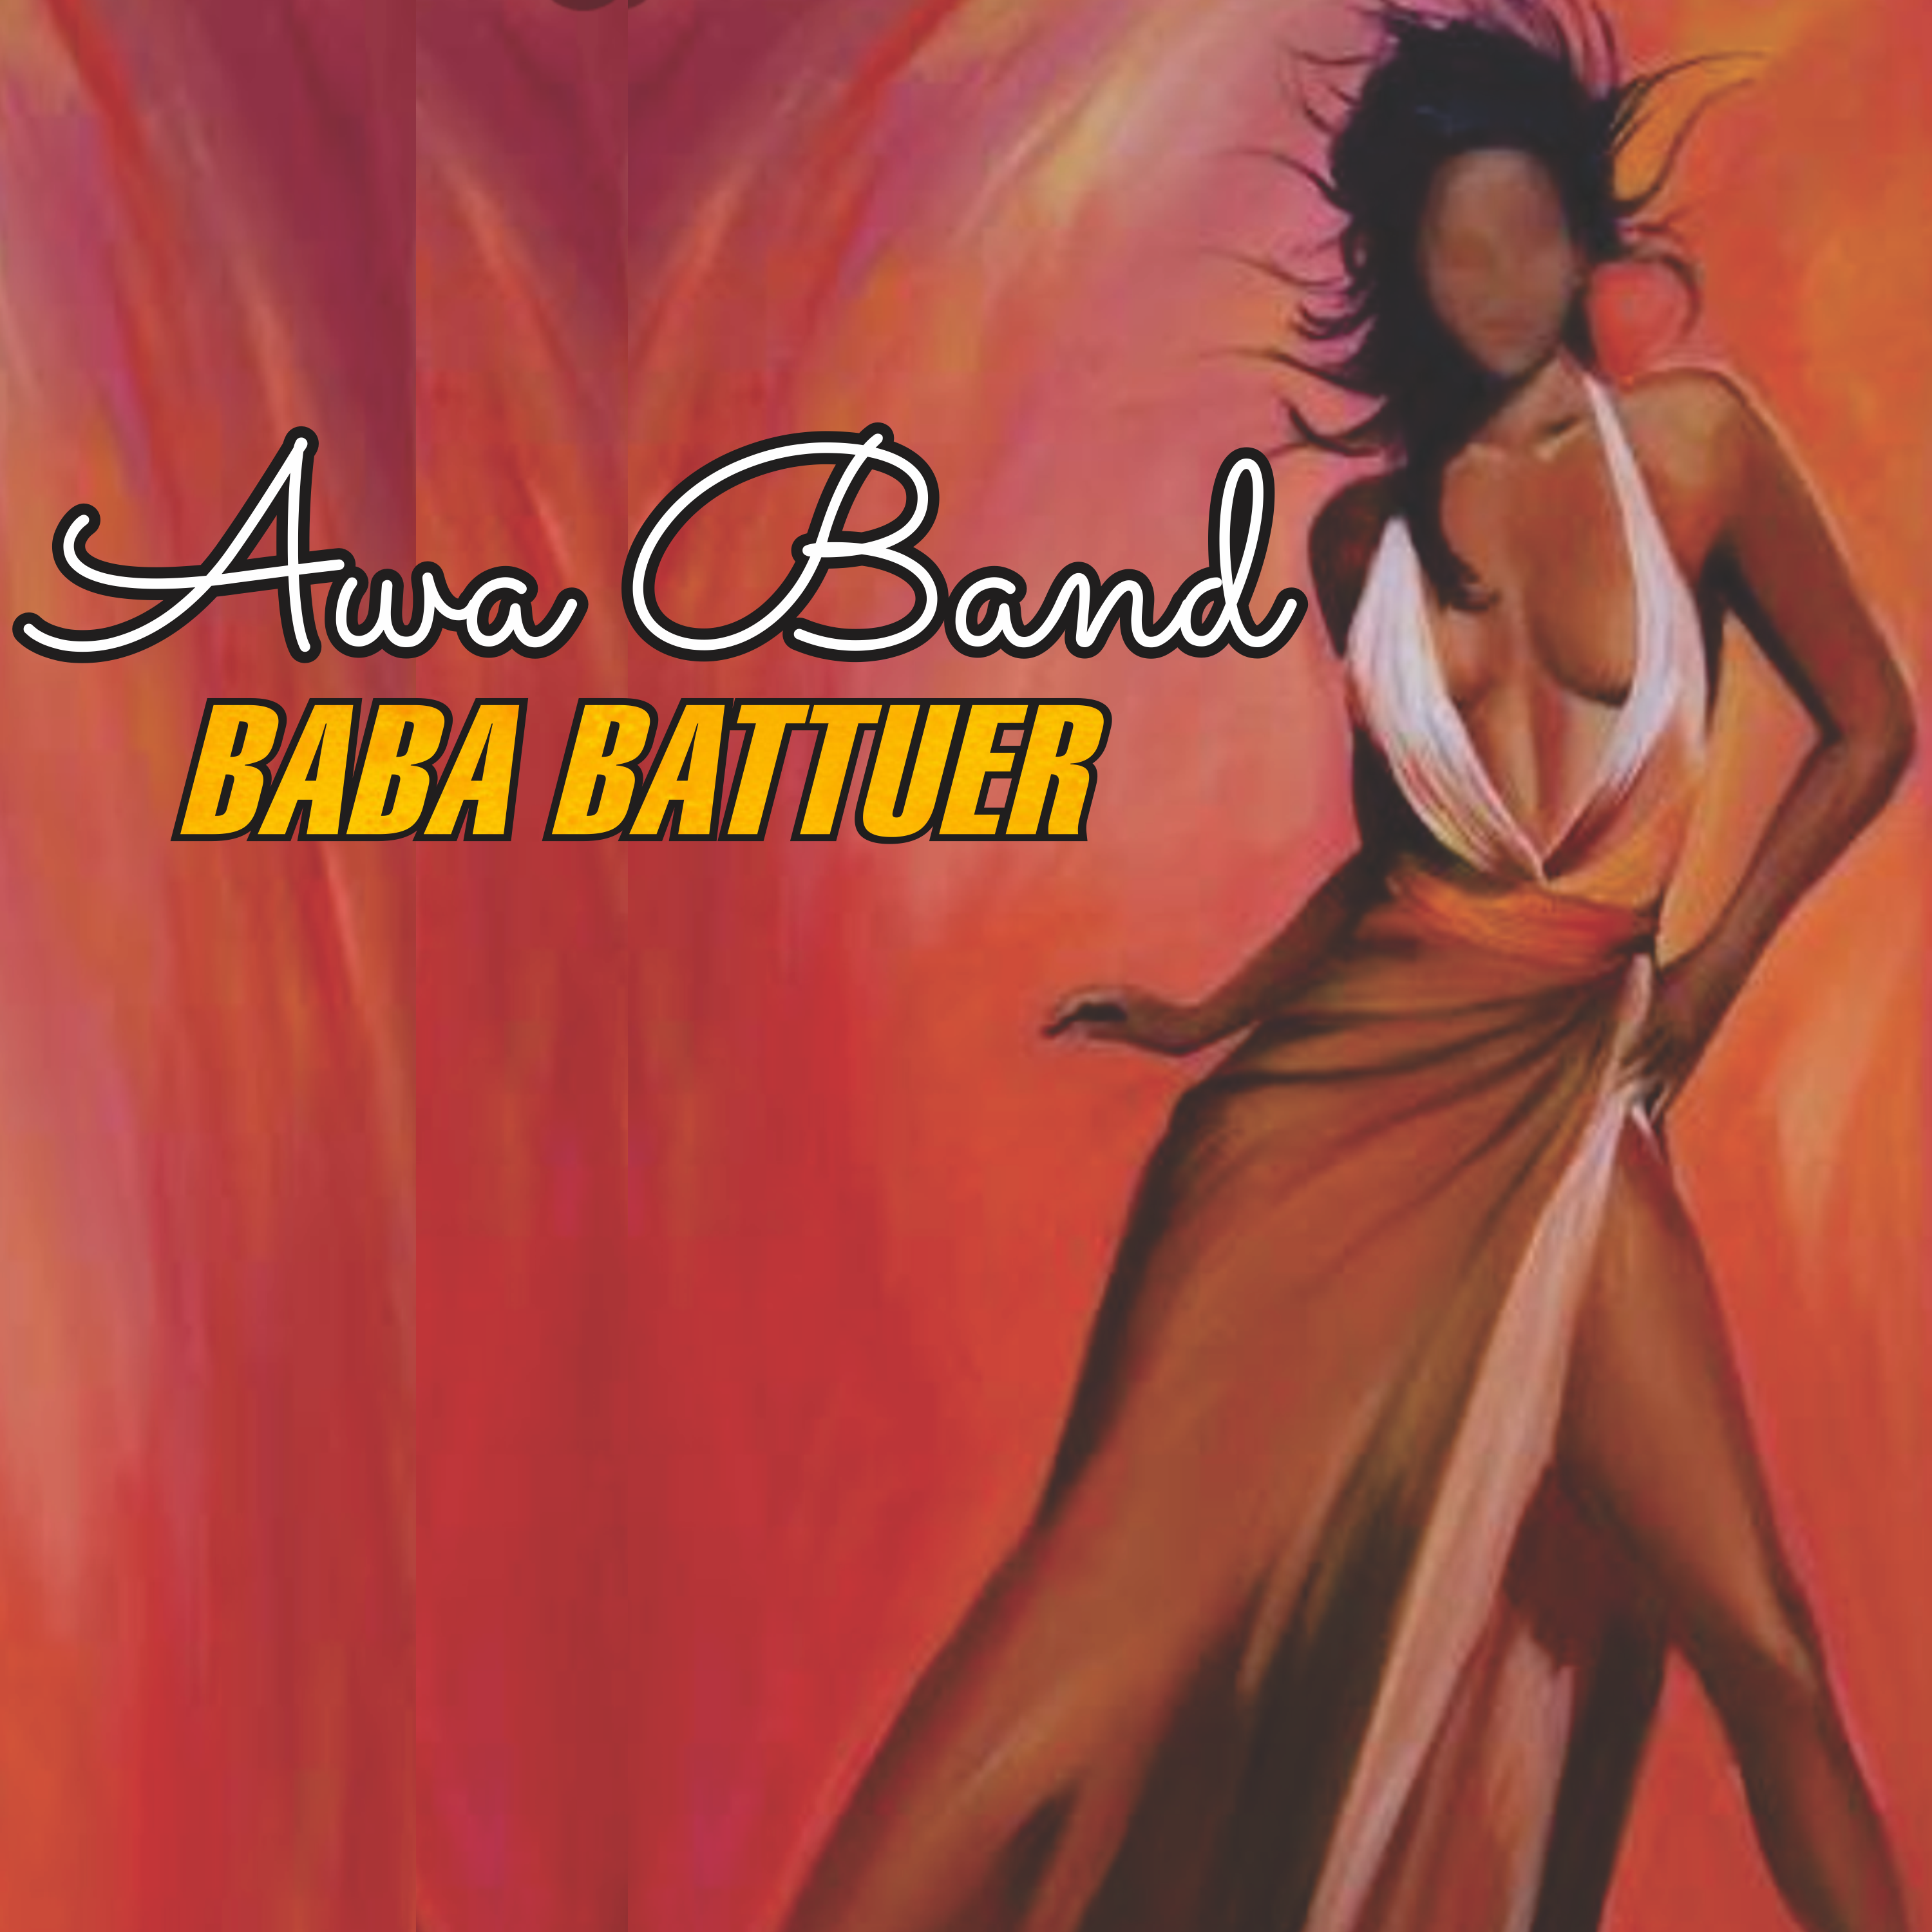 Baba Batteur (Original Afrobeat French Version Mix) 